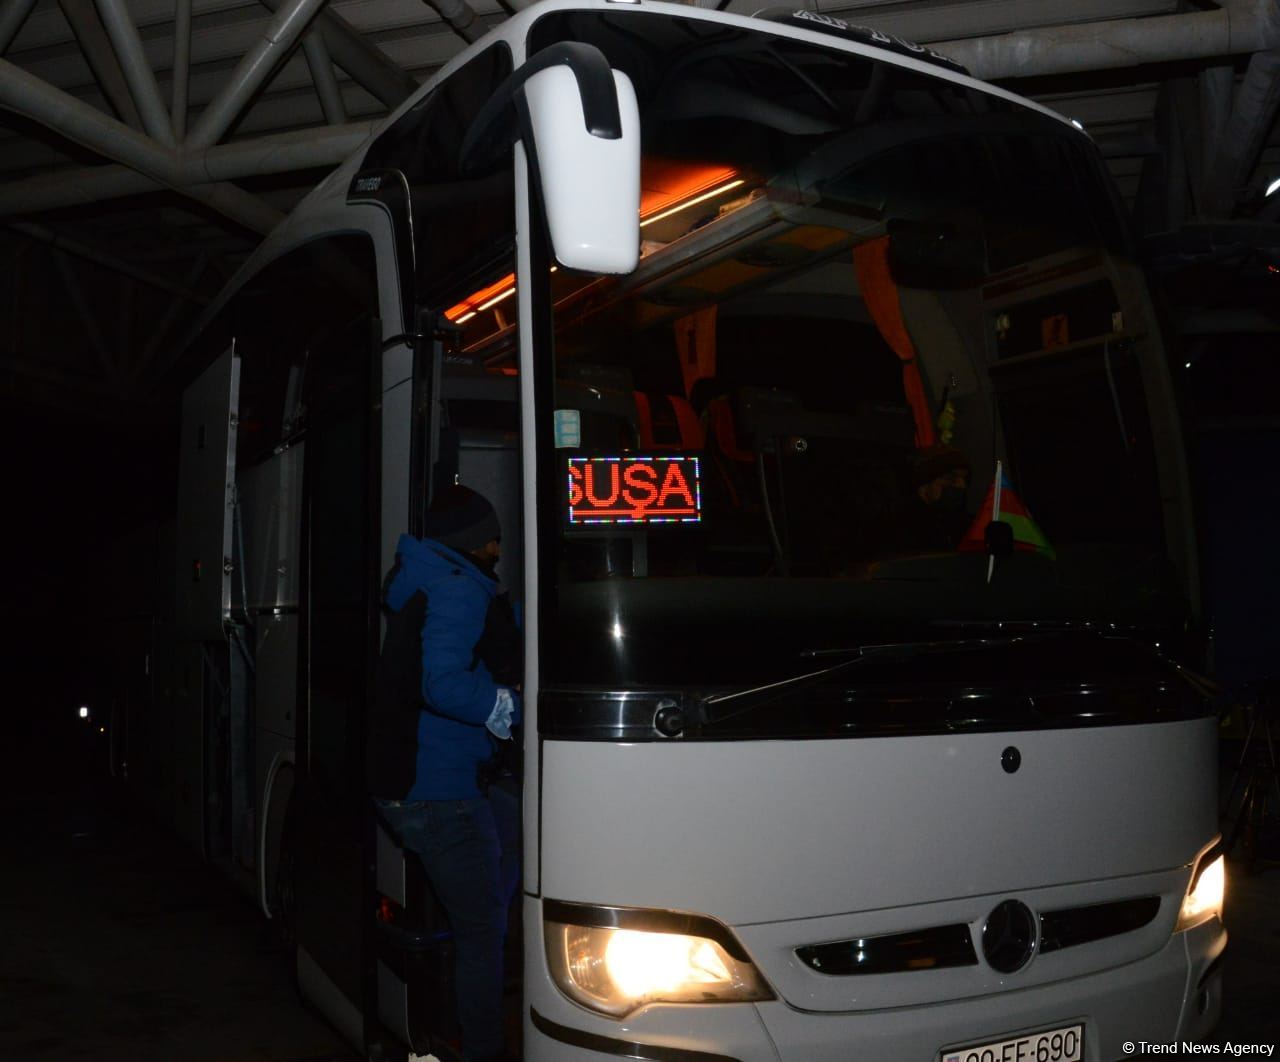 First bus of Baku-Shusha-Baku route departs (PHOTO)